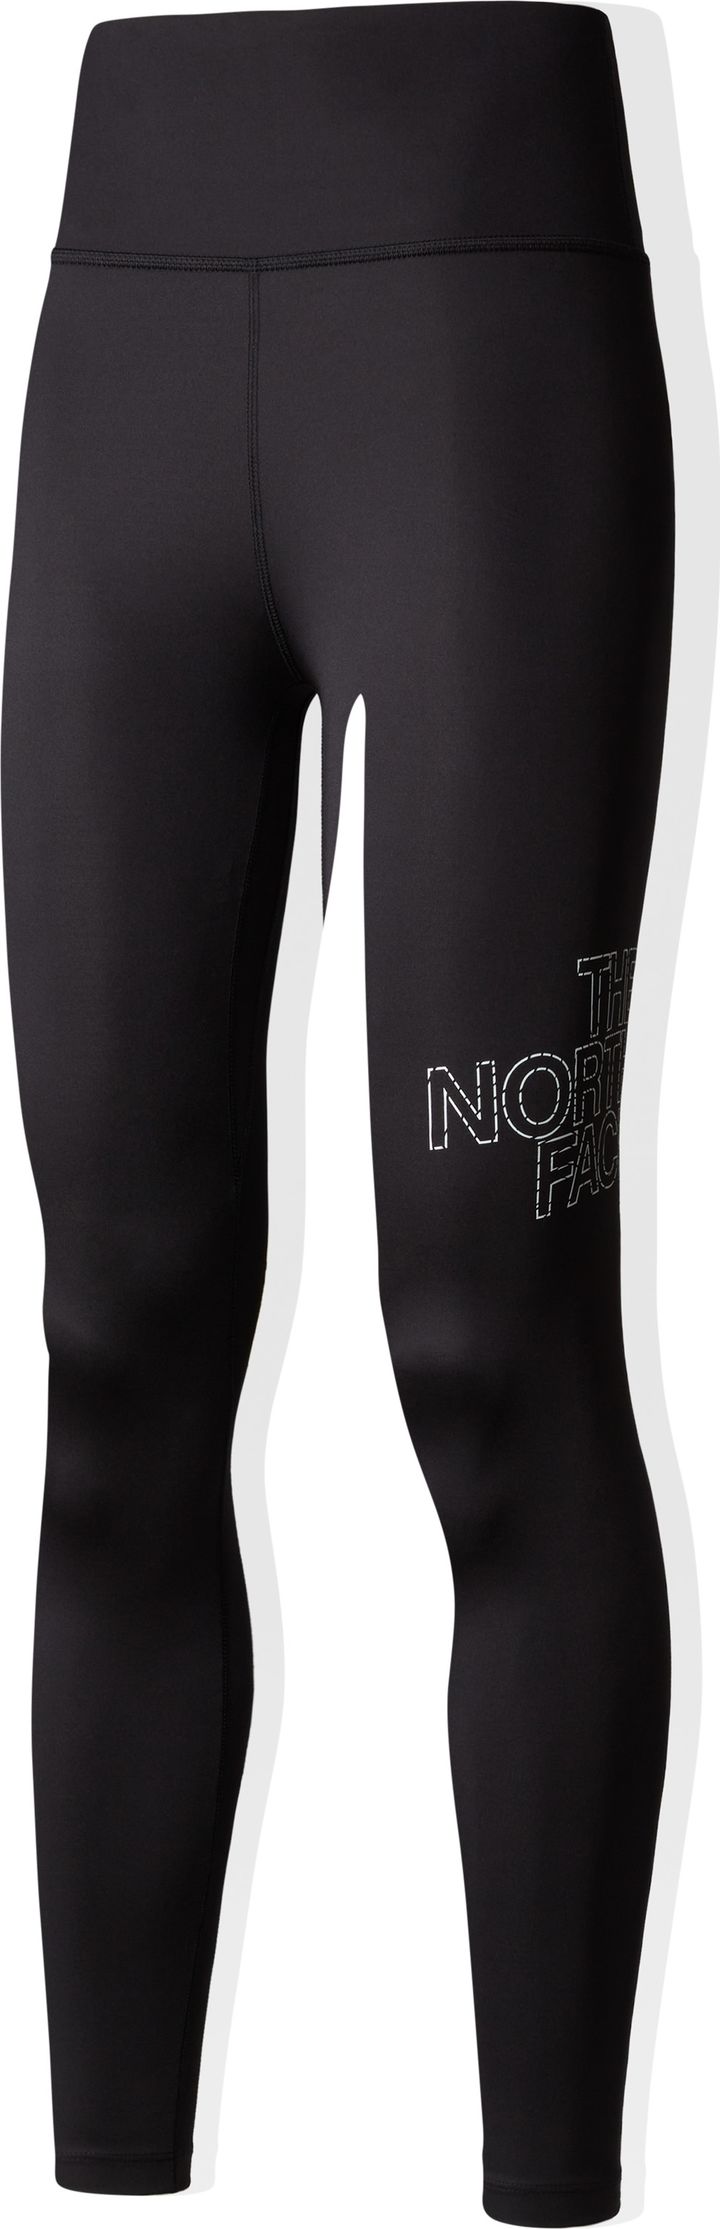 The North Face Training Flex high waist 7/8 leggings in black